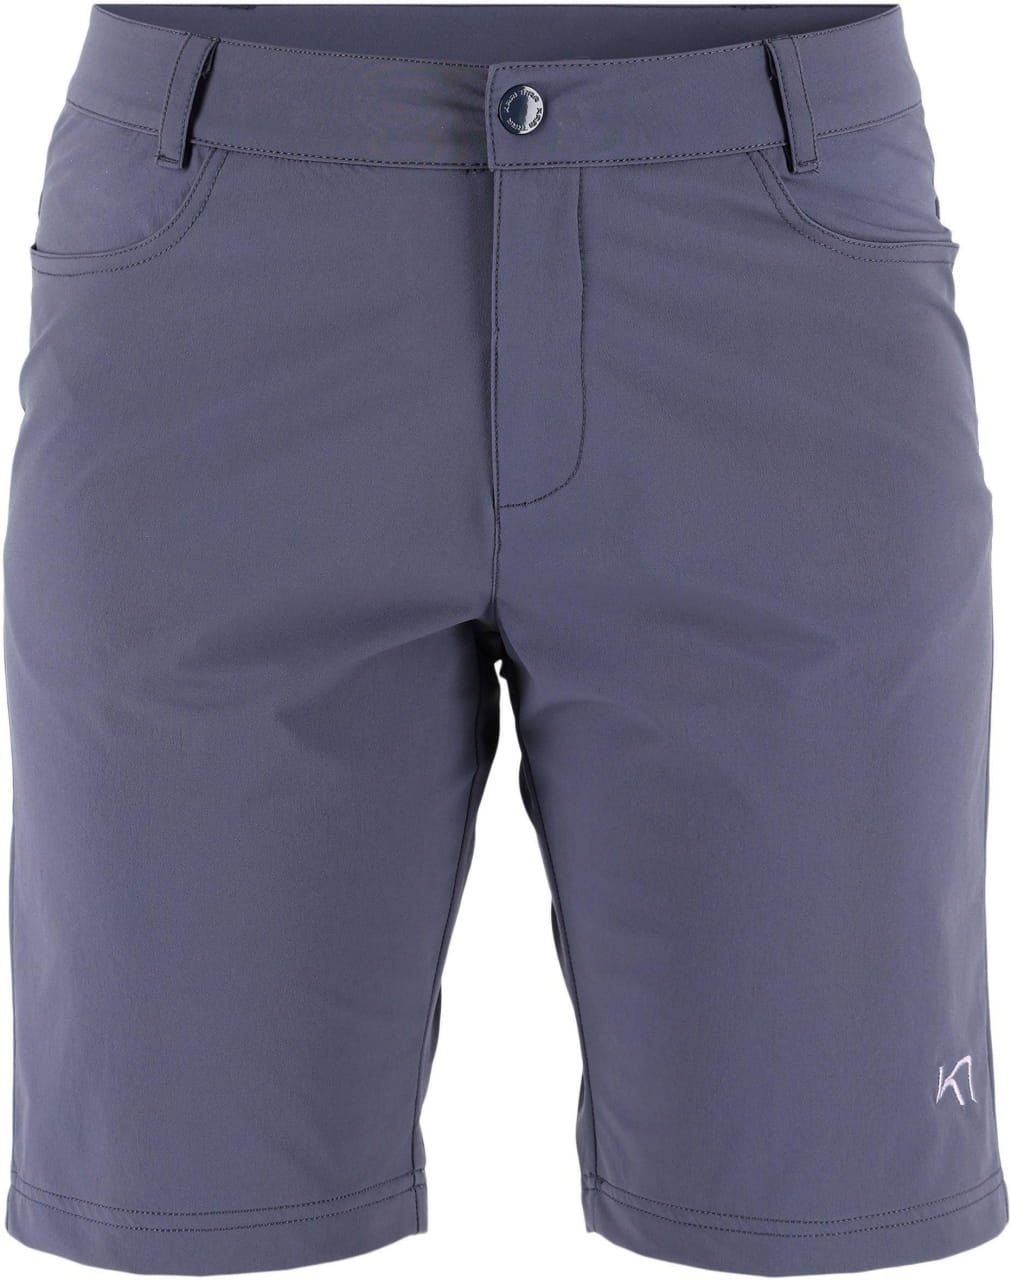 Pantaloni scurți pentru femei în aer liber Kari Traa Thale Hiking Shorts